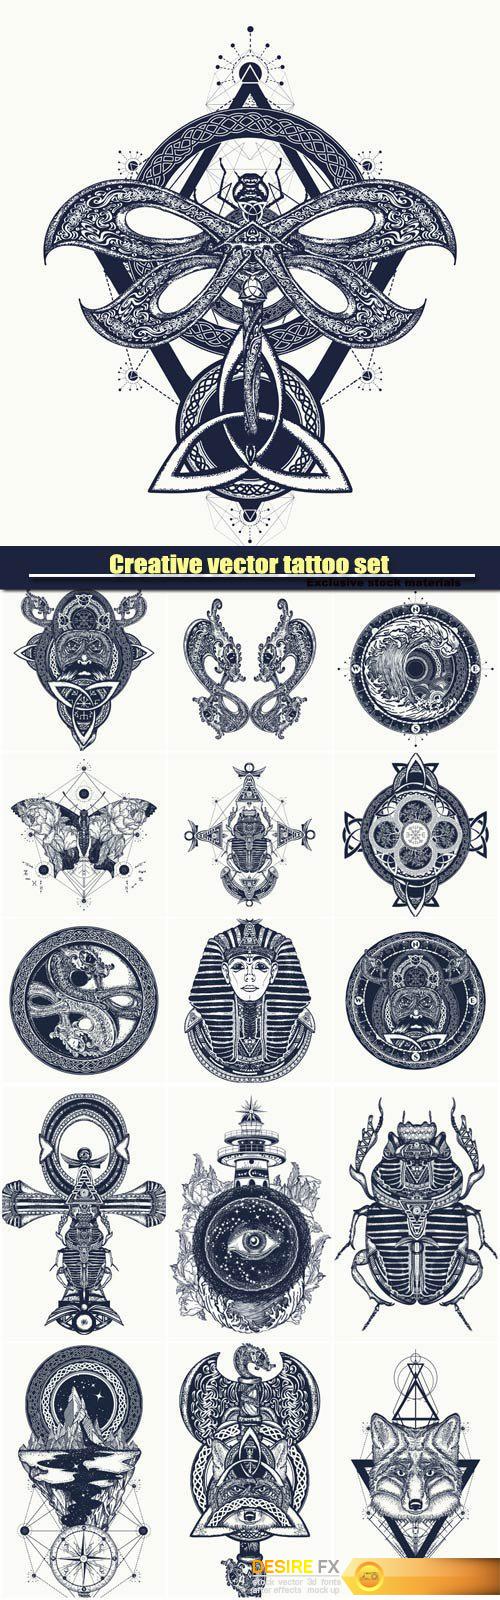 Creative vector tattoo set